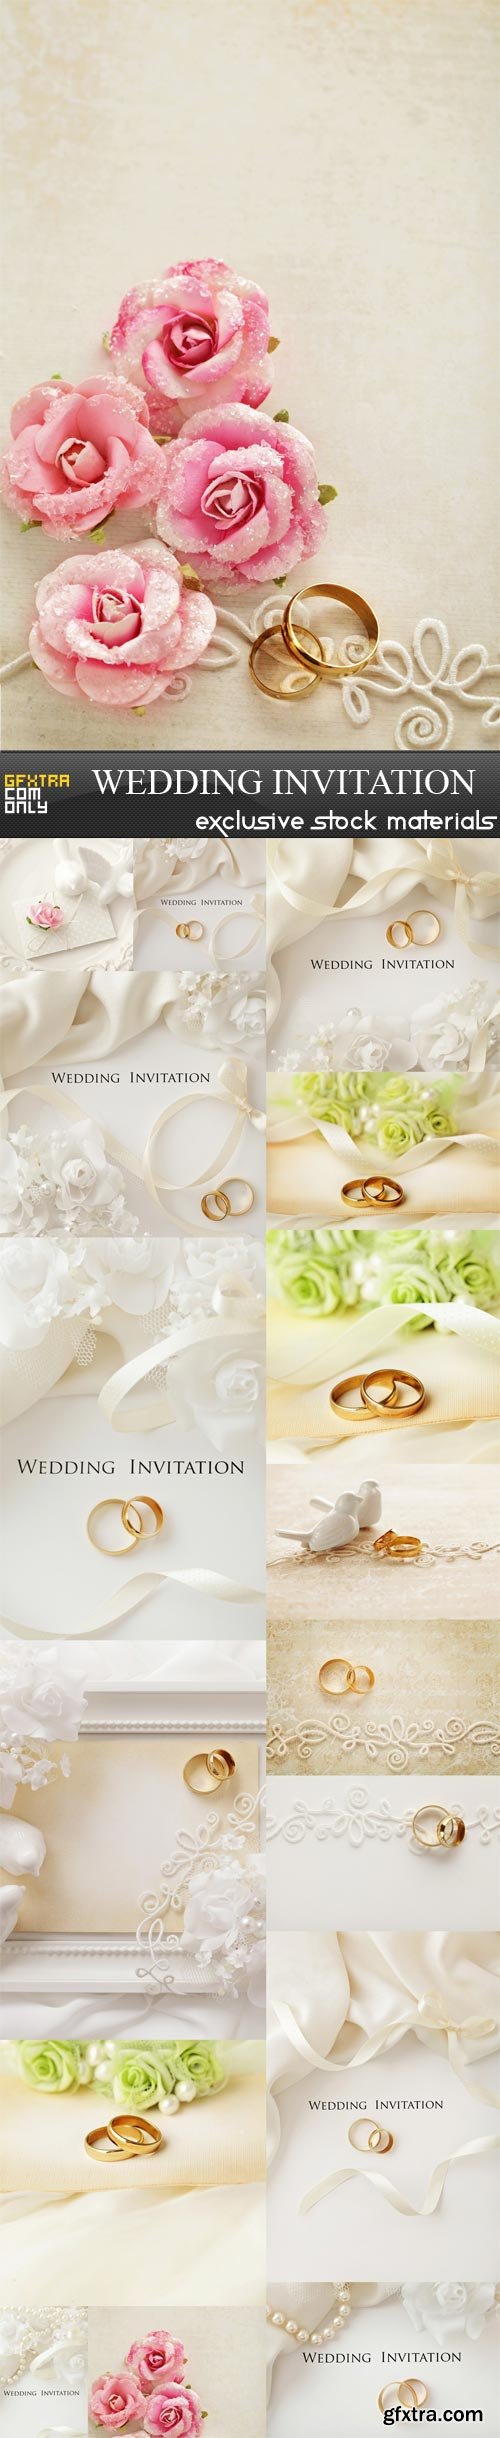 Wedding Invitation 1, 16 UHQ JPEG